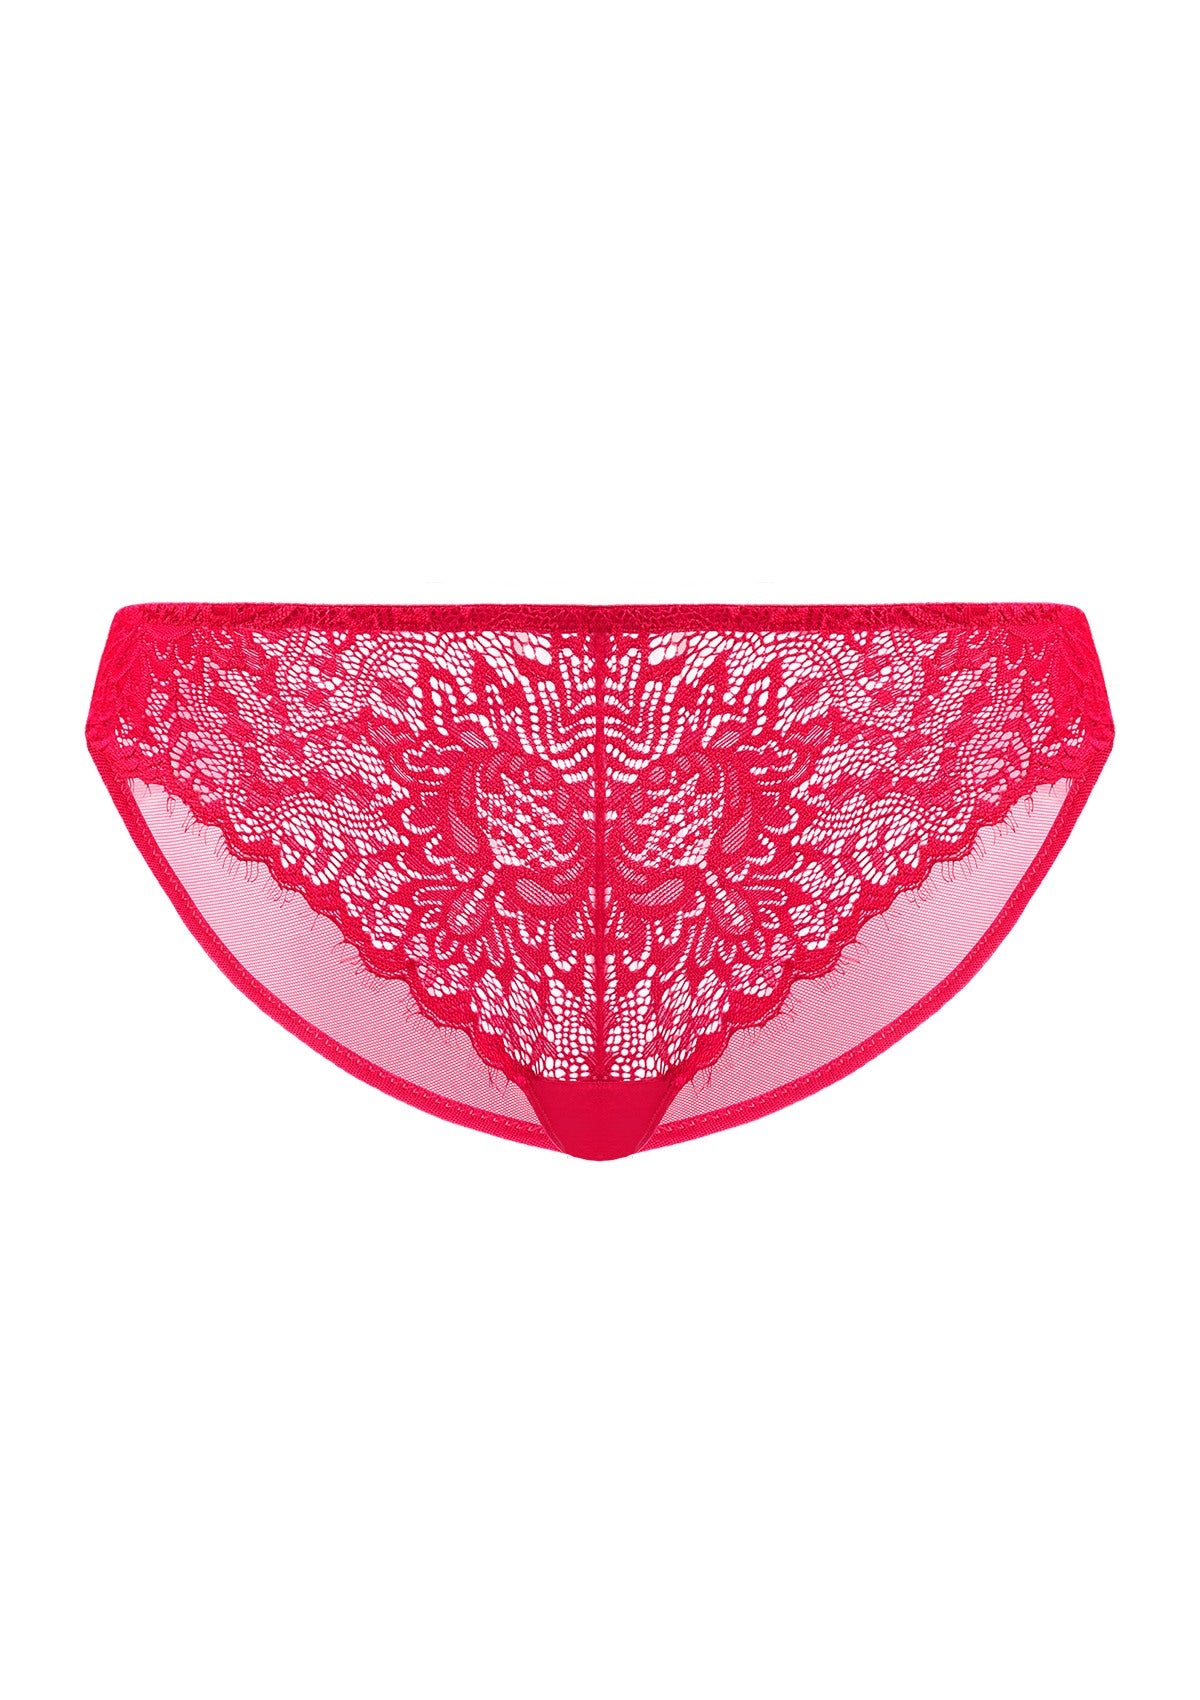 HSIA Sunflower Exquisite Raspberry Lace Bikini Underwear - XXXL / Raspberry